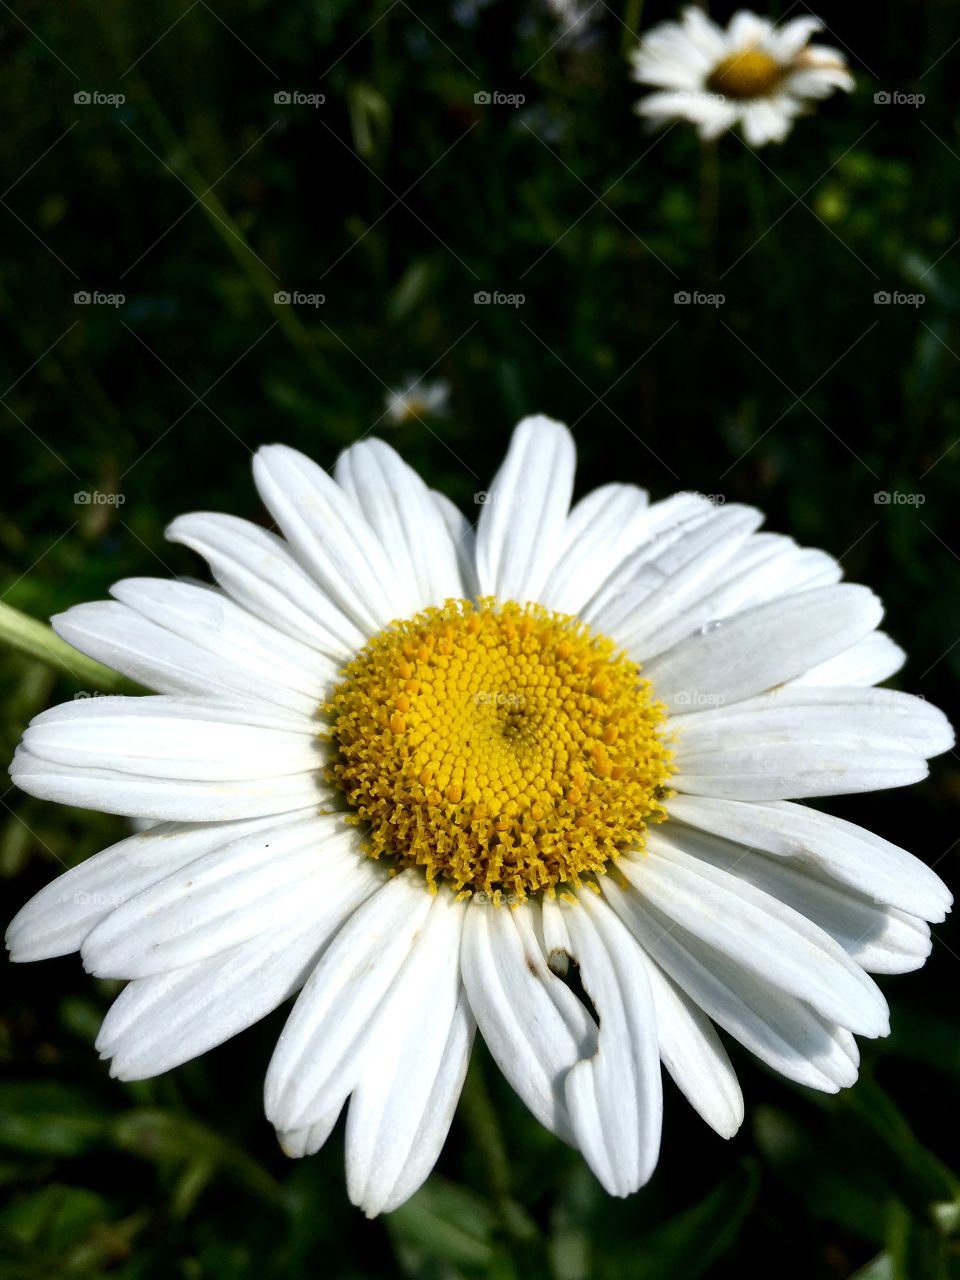 Yellow and white daisy.